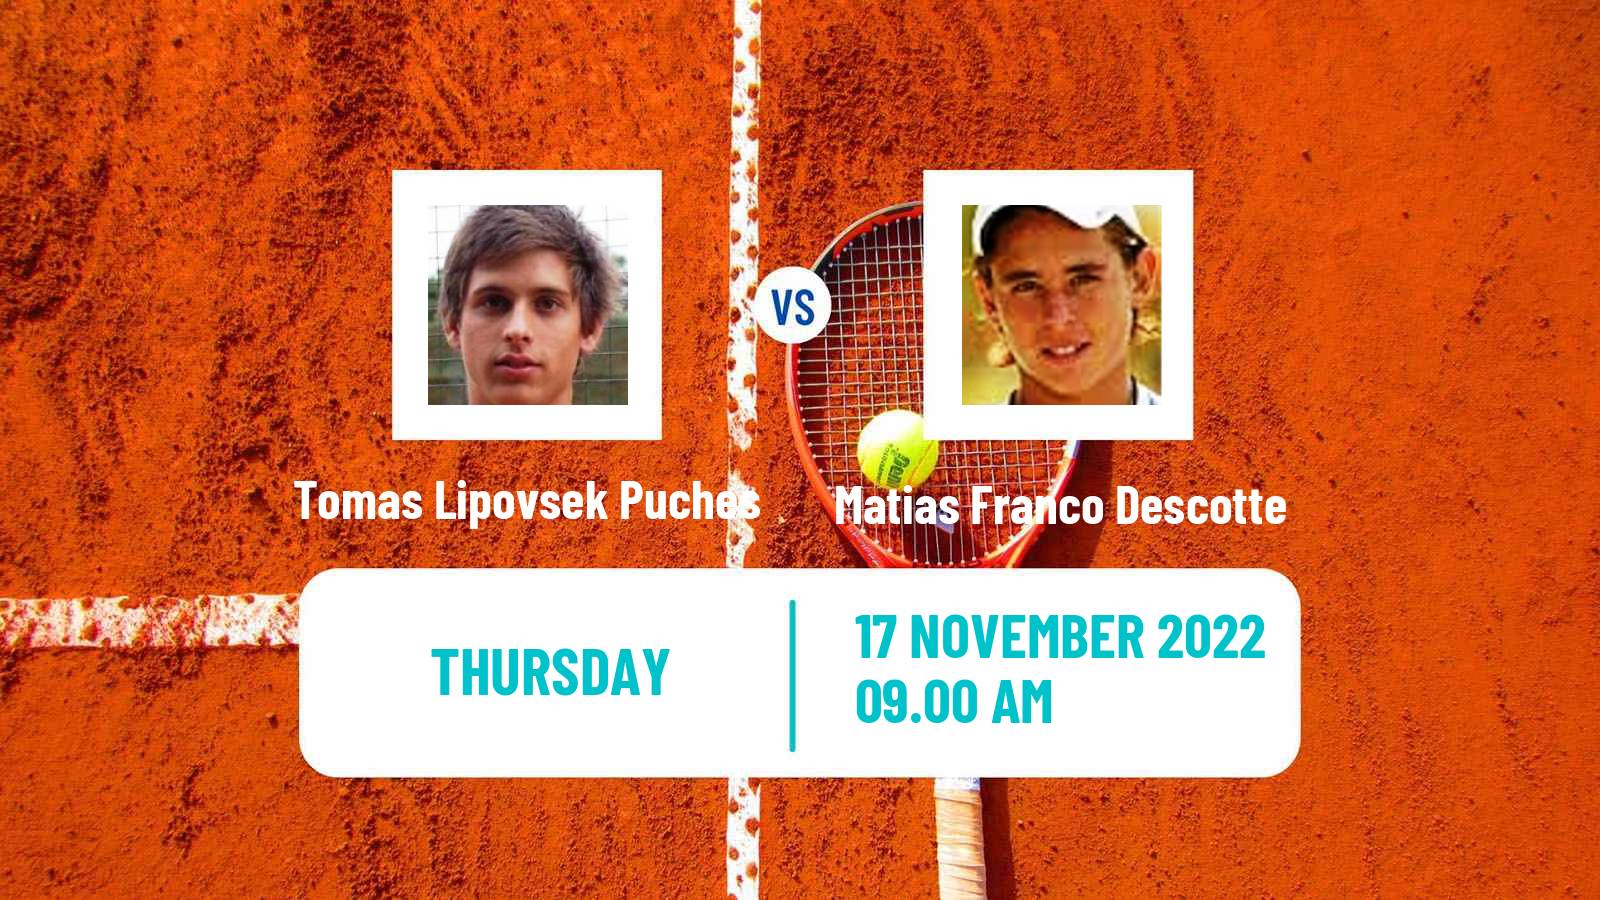 Tennis ITF Tournaments Tomas Lipovsek Puches - Matias Franco Descotte